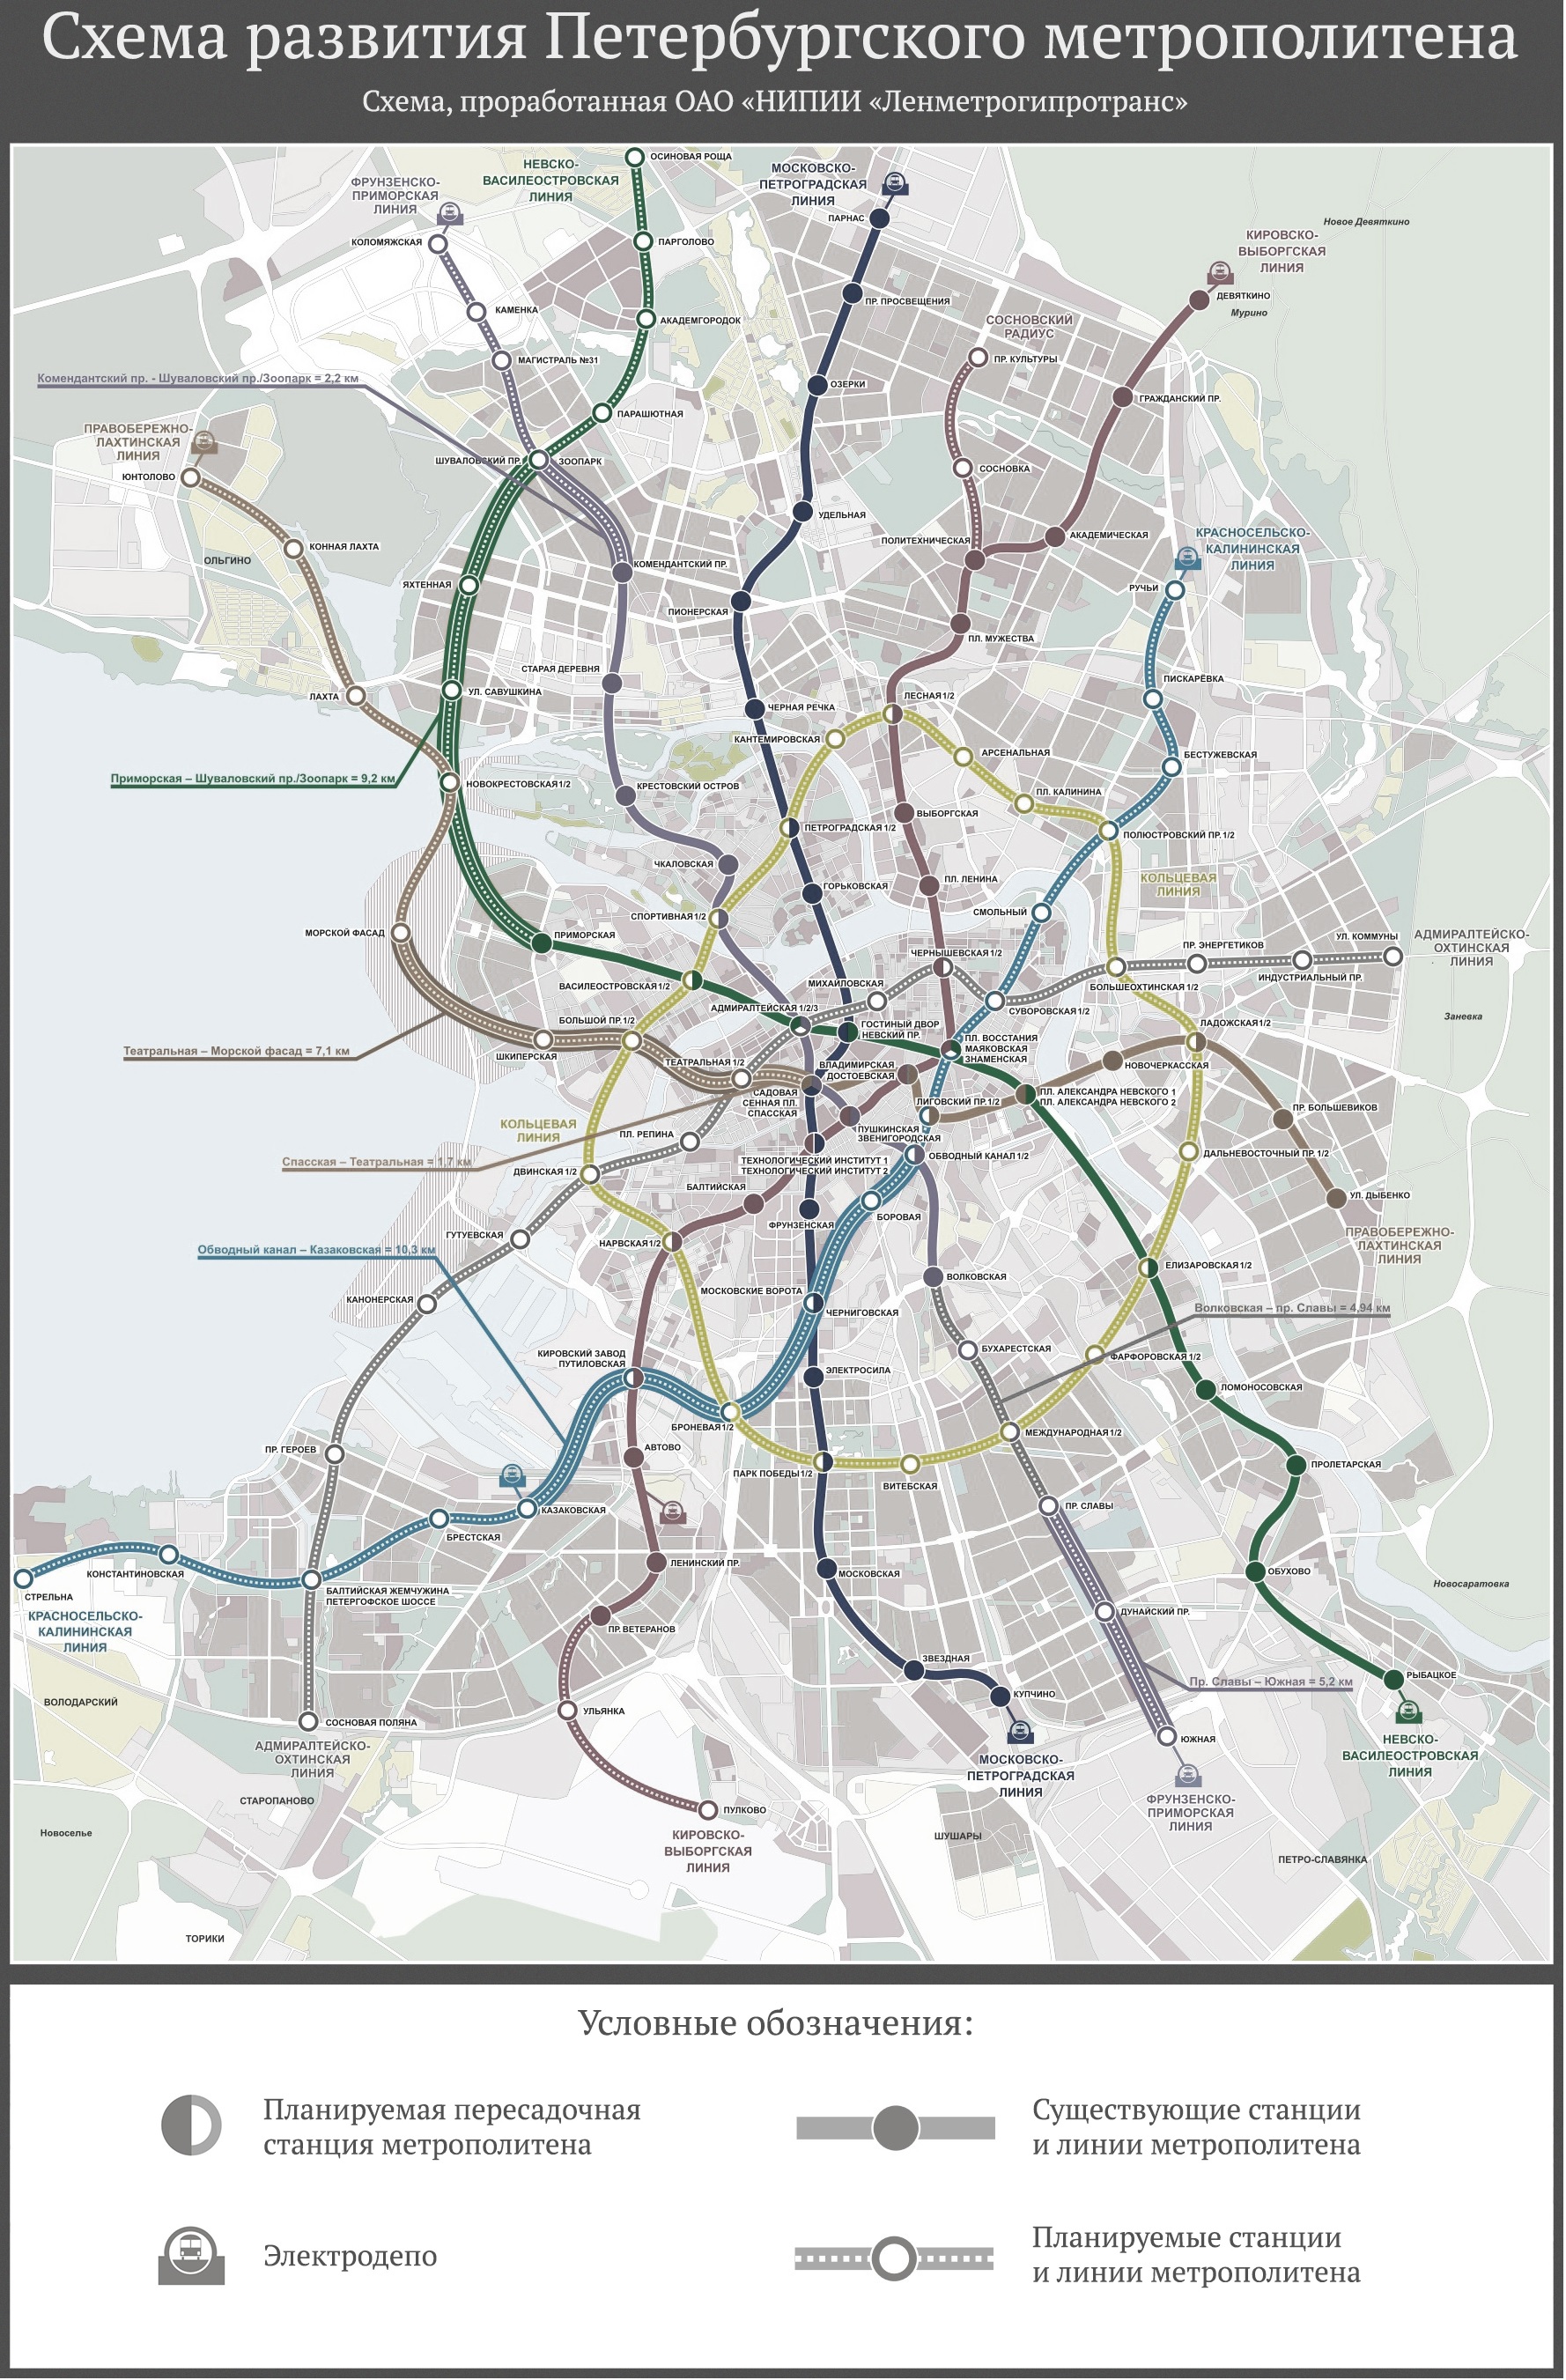 Карта метро Санкт-Петербурга - интерактивная схема метрополитена с расчетомвремени